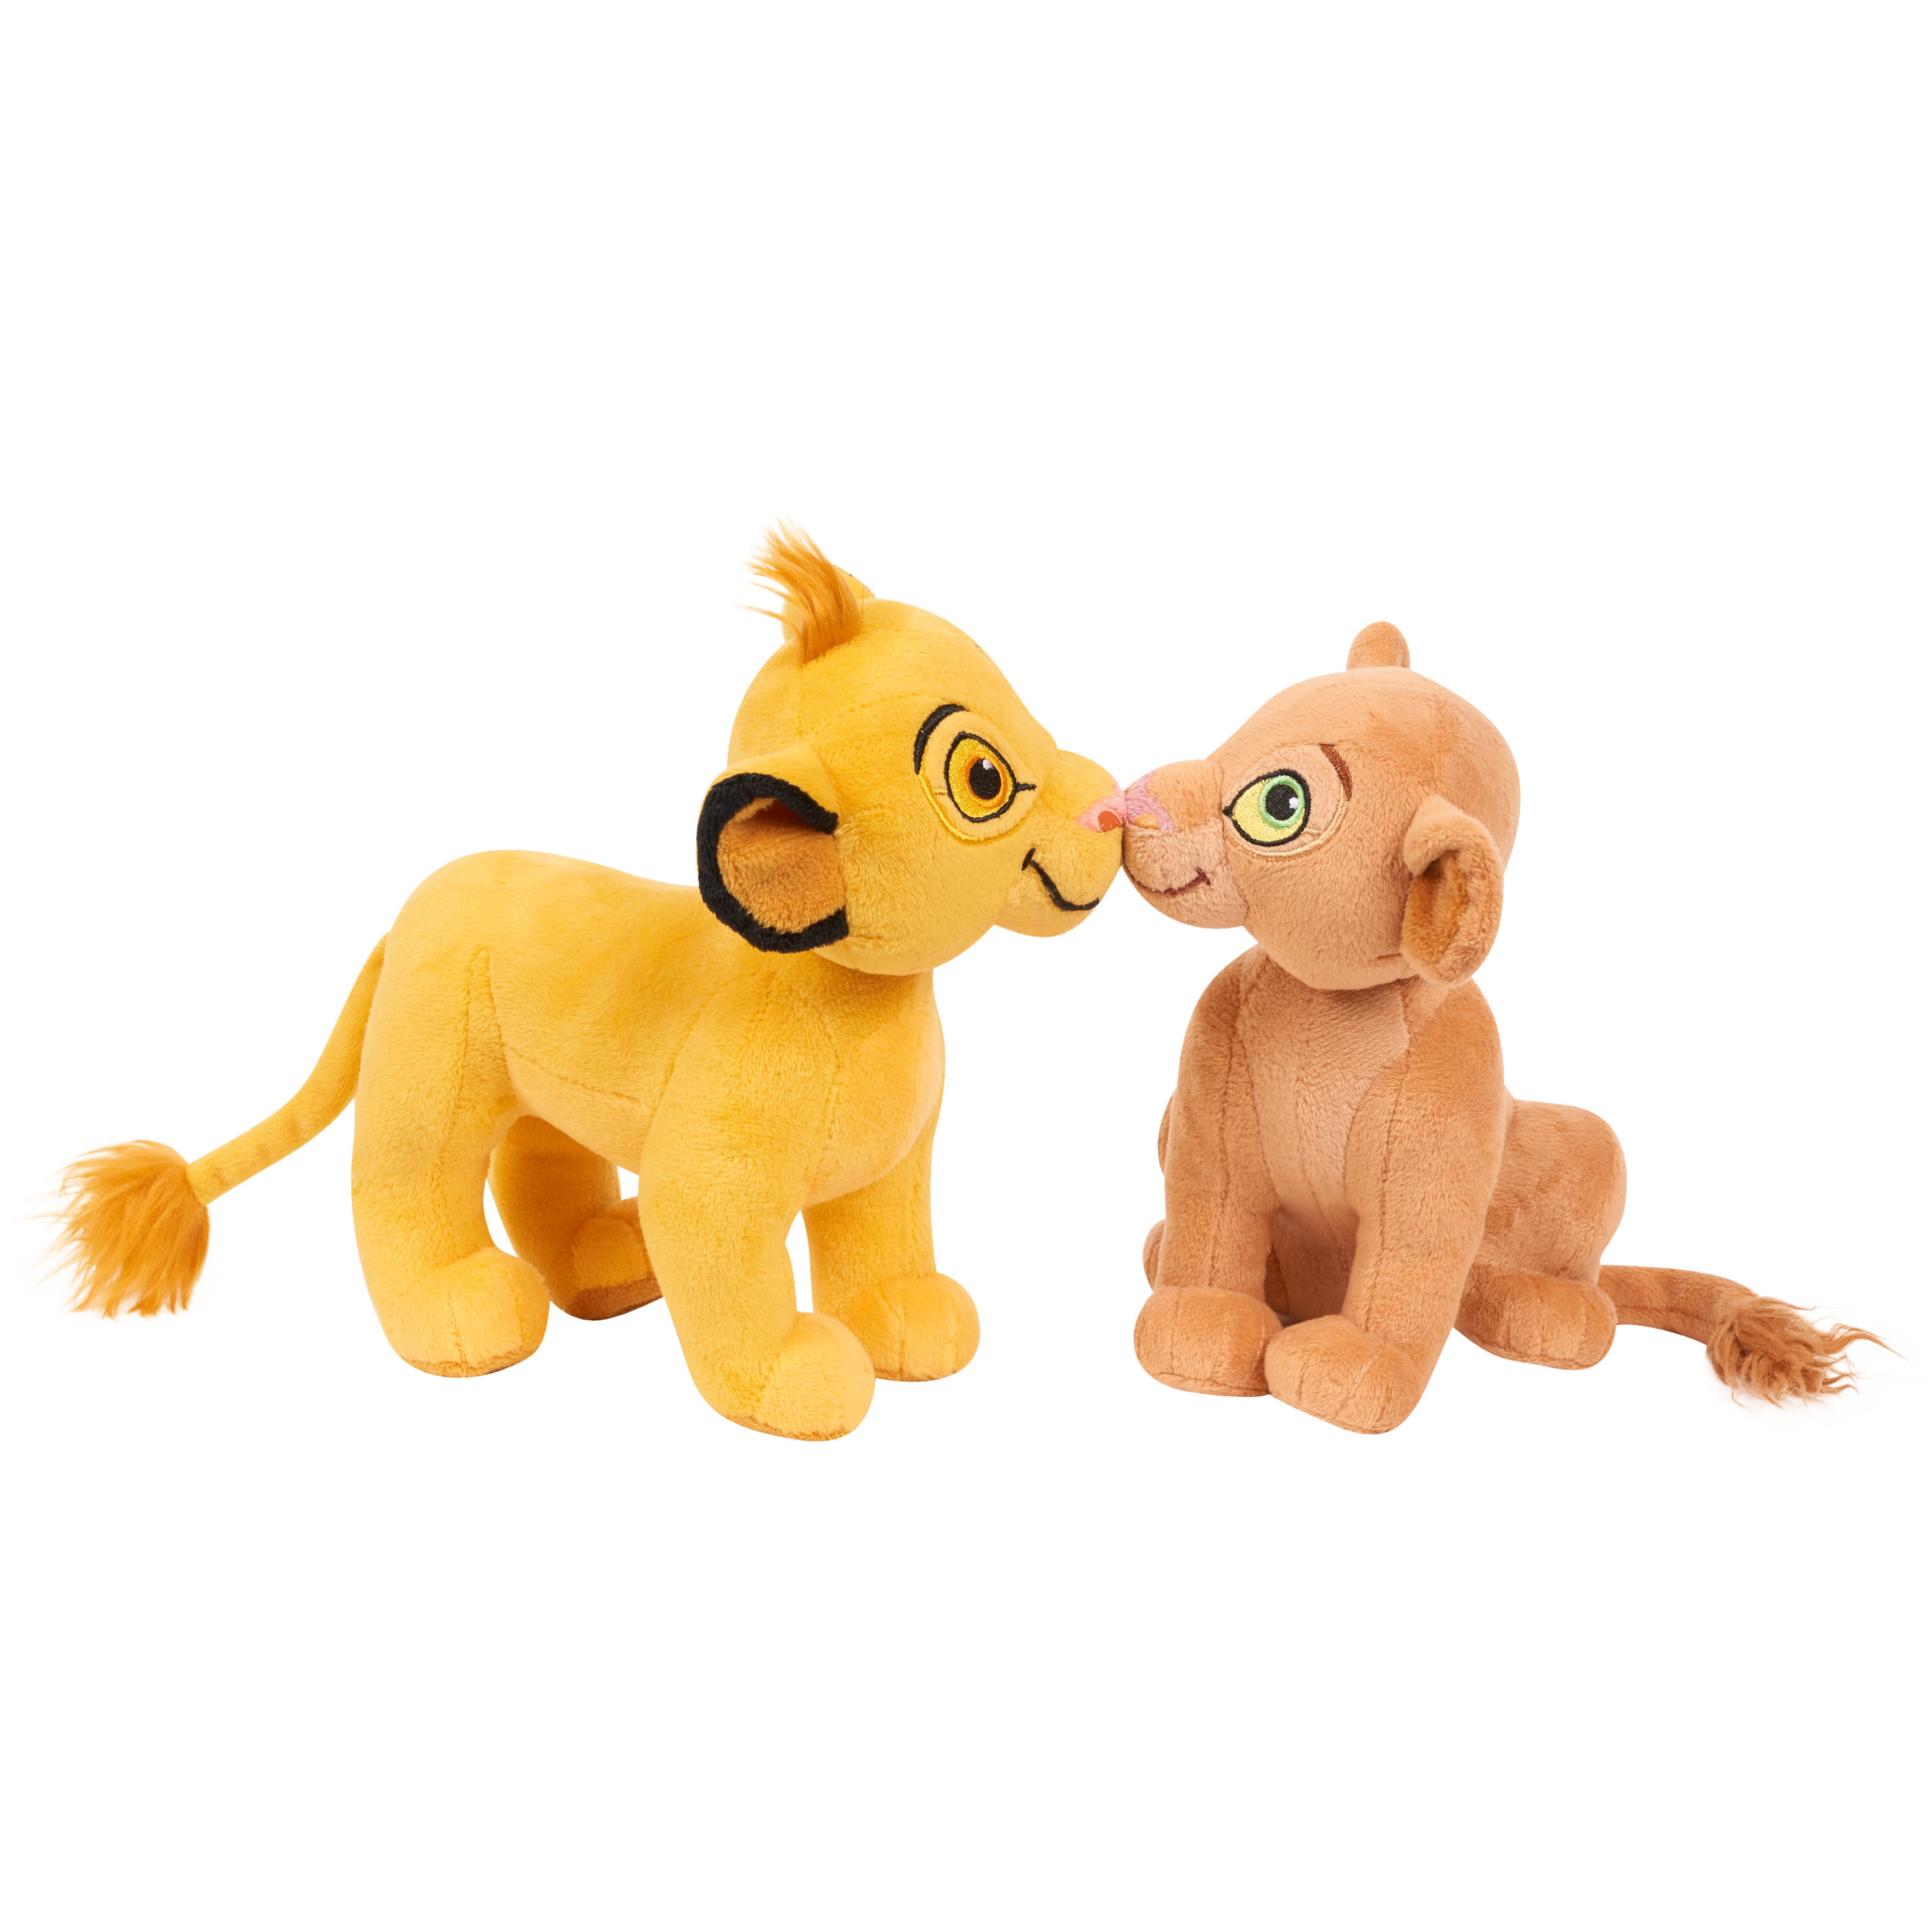 Disney The Lion King Kissing Simba and Nala Plush Toys 2019 for sale online 